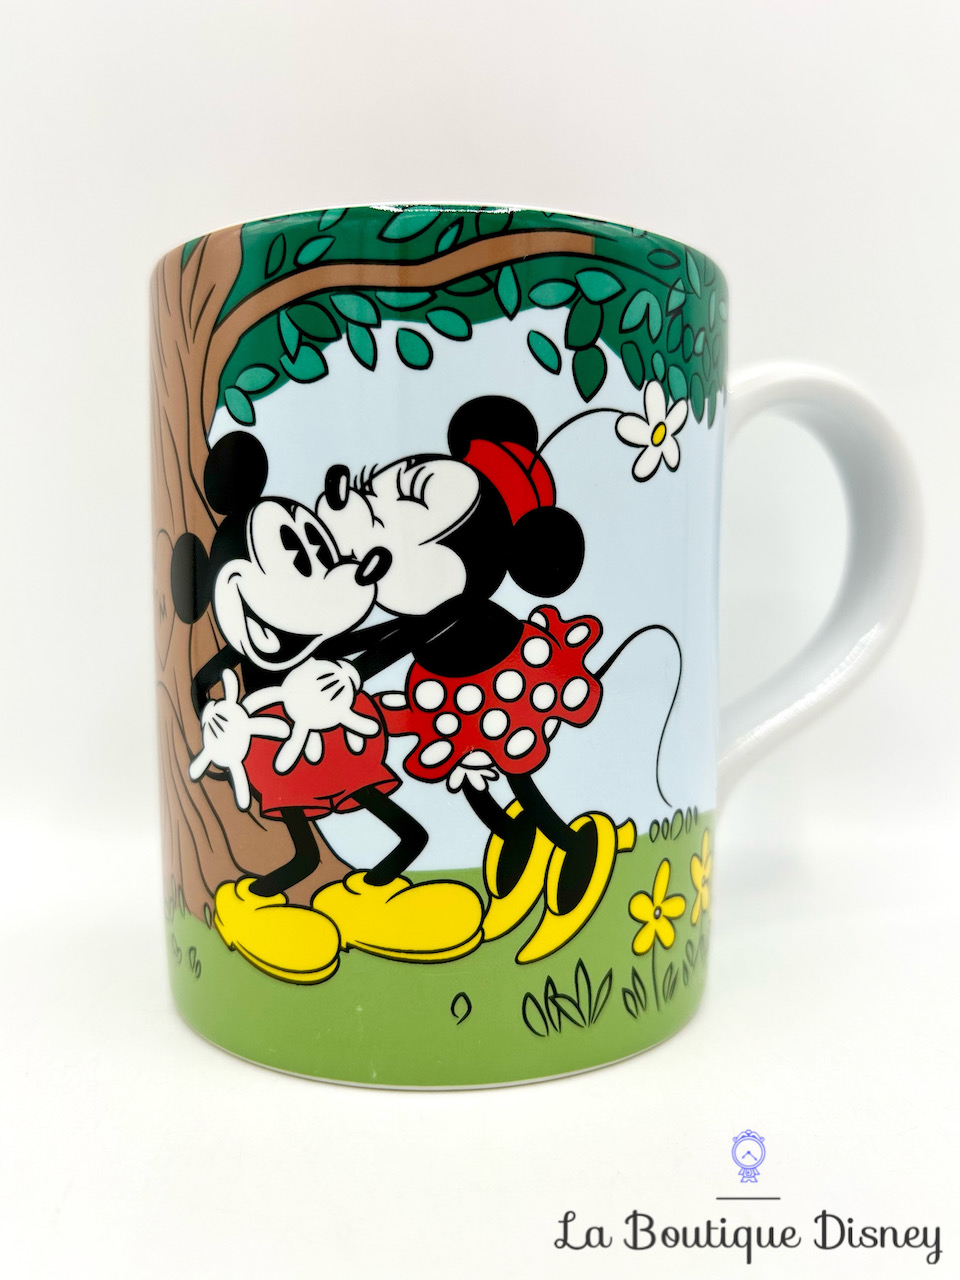 Tasse Mickey Minnie pique nique Disney Store mug 2018 rétro vintage